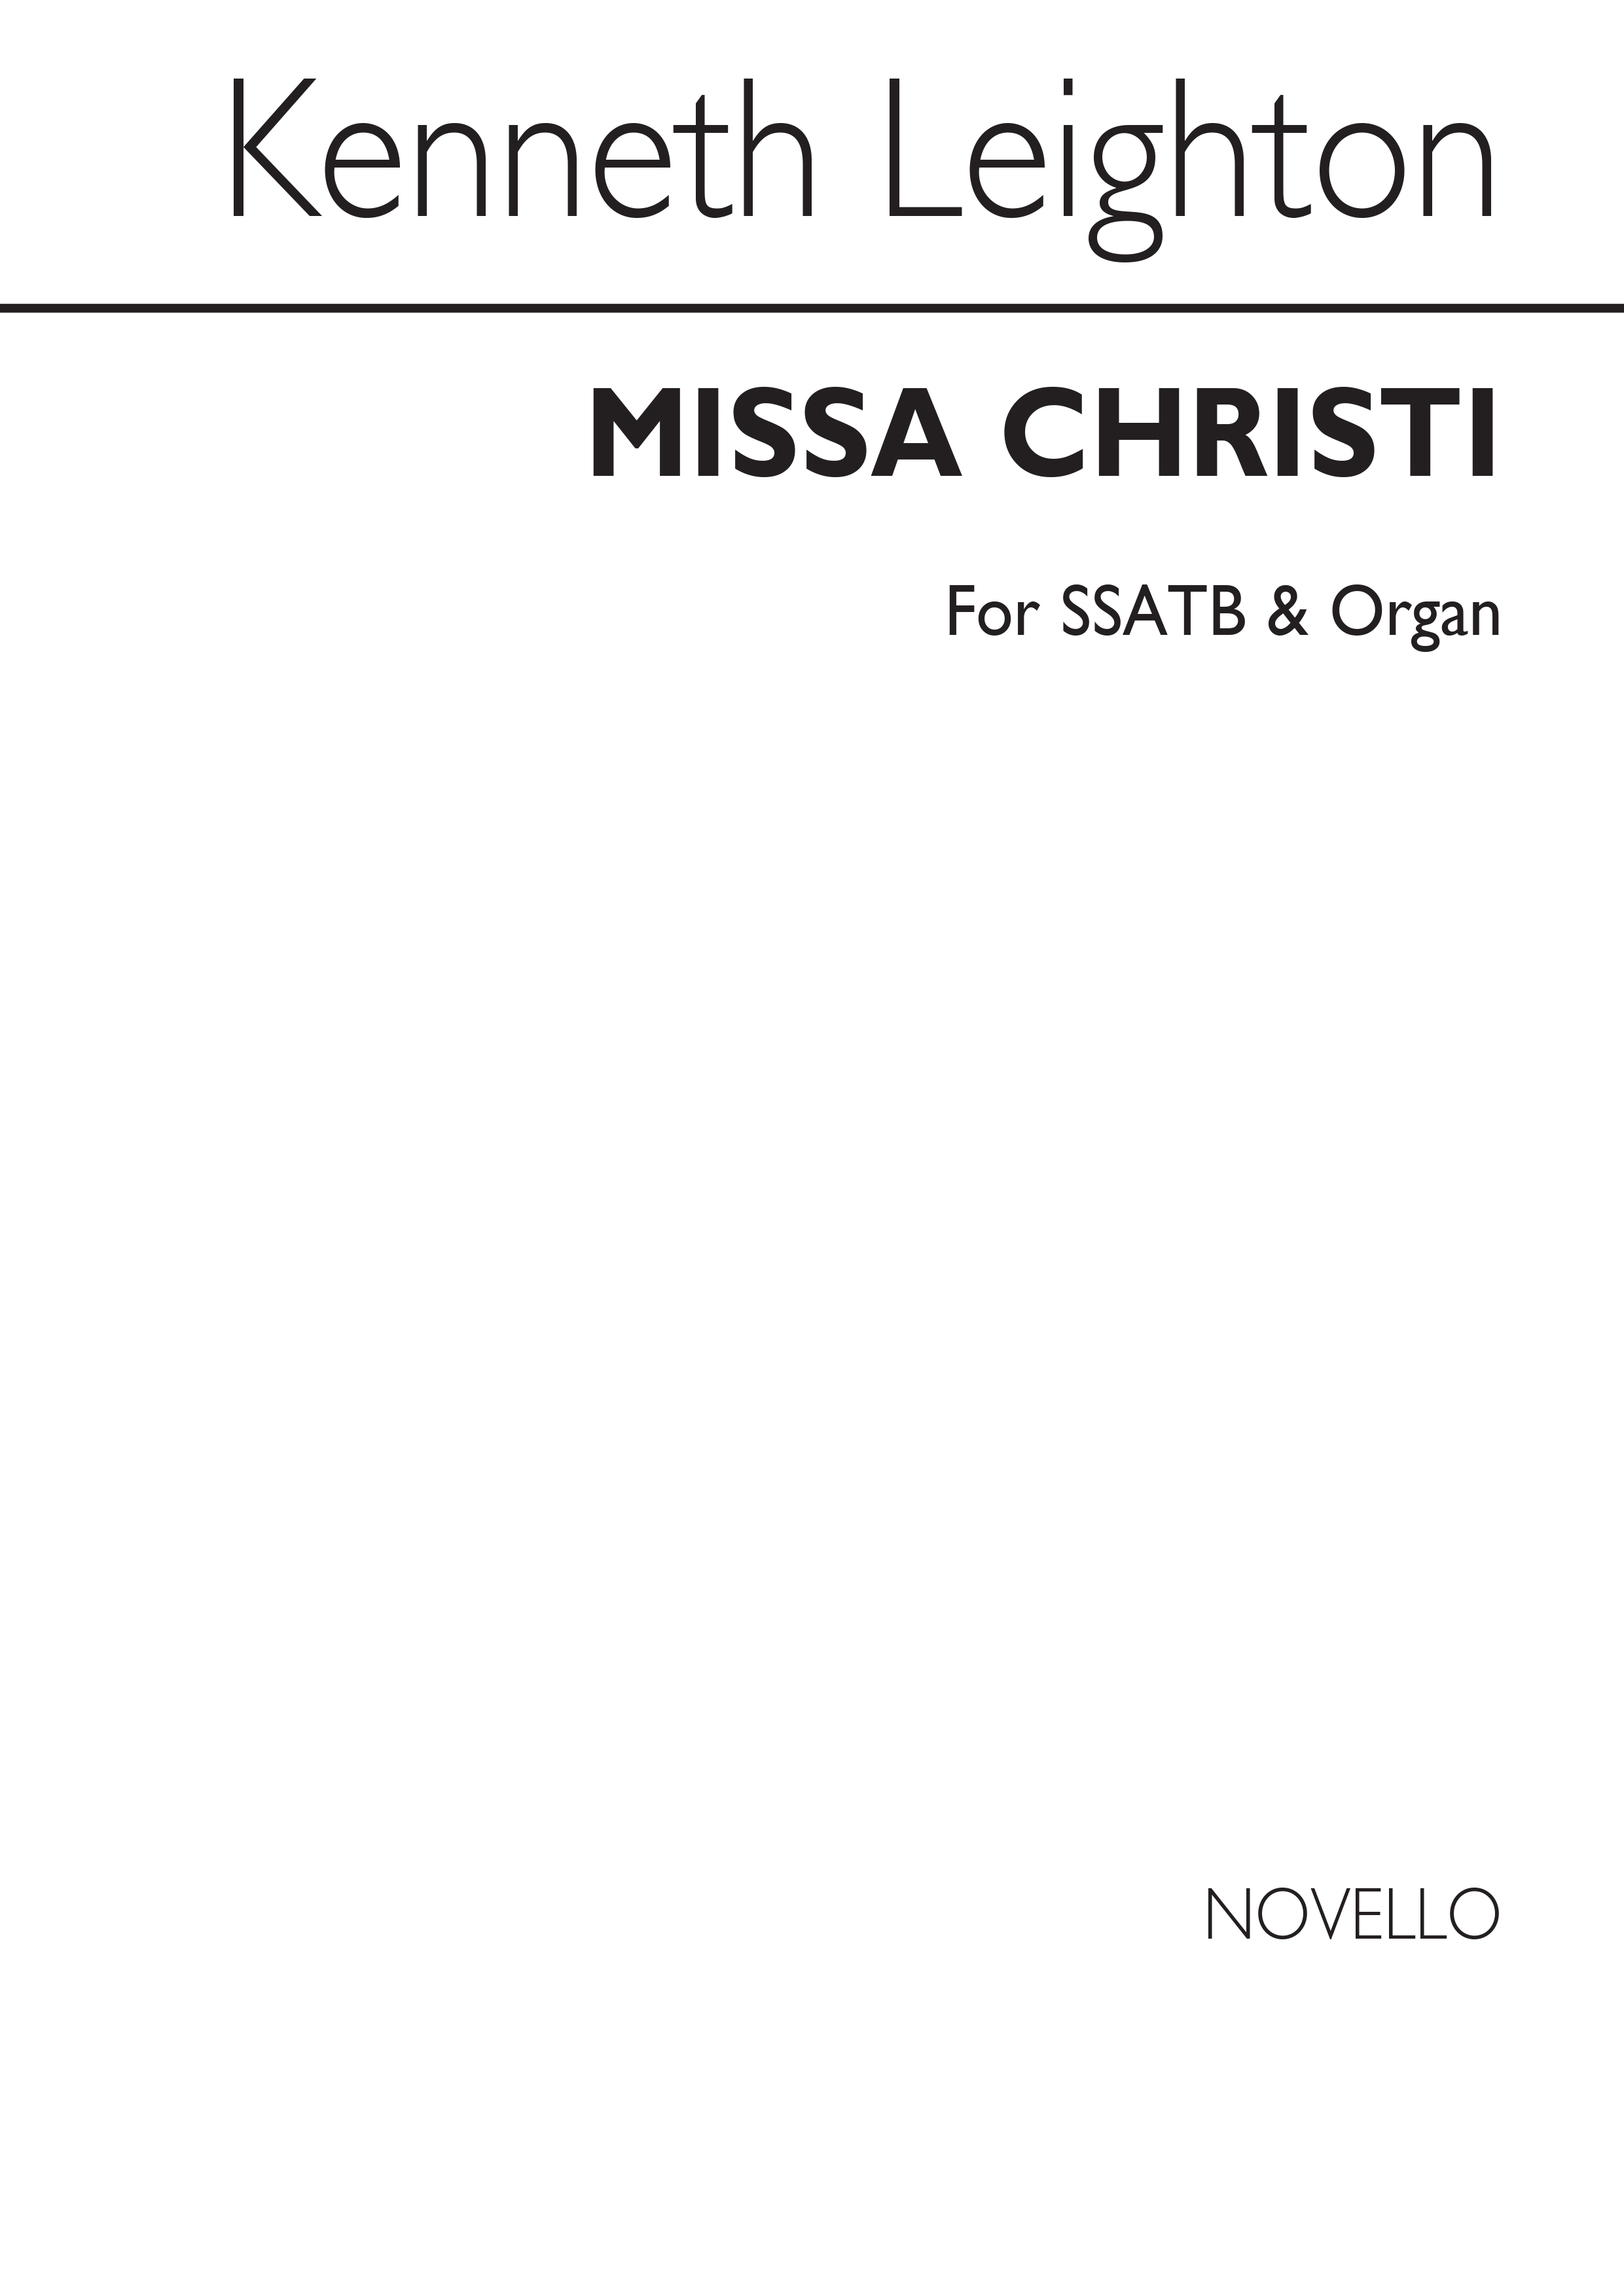 Kenneth Leighton: Missa Christi For SSATB And Organ